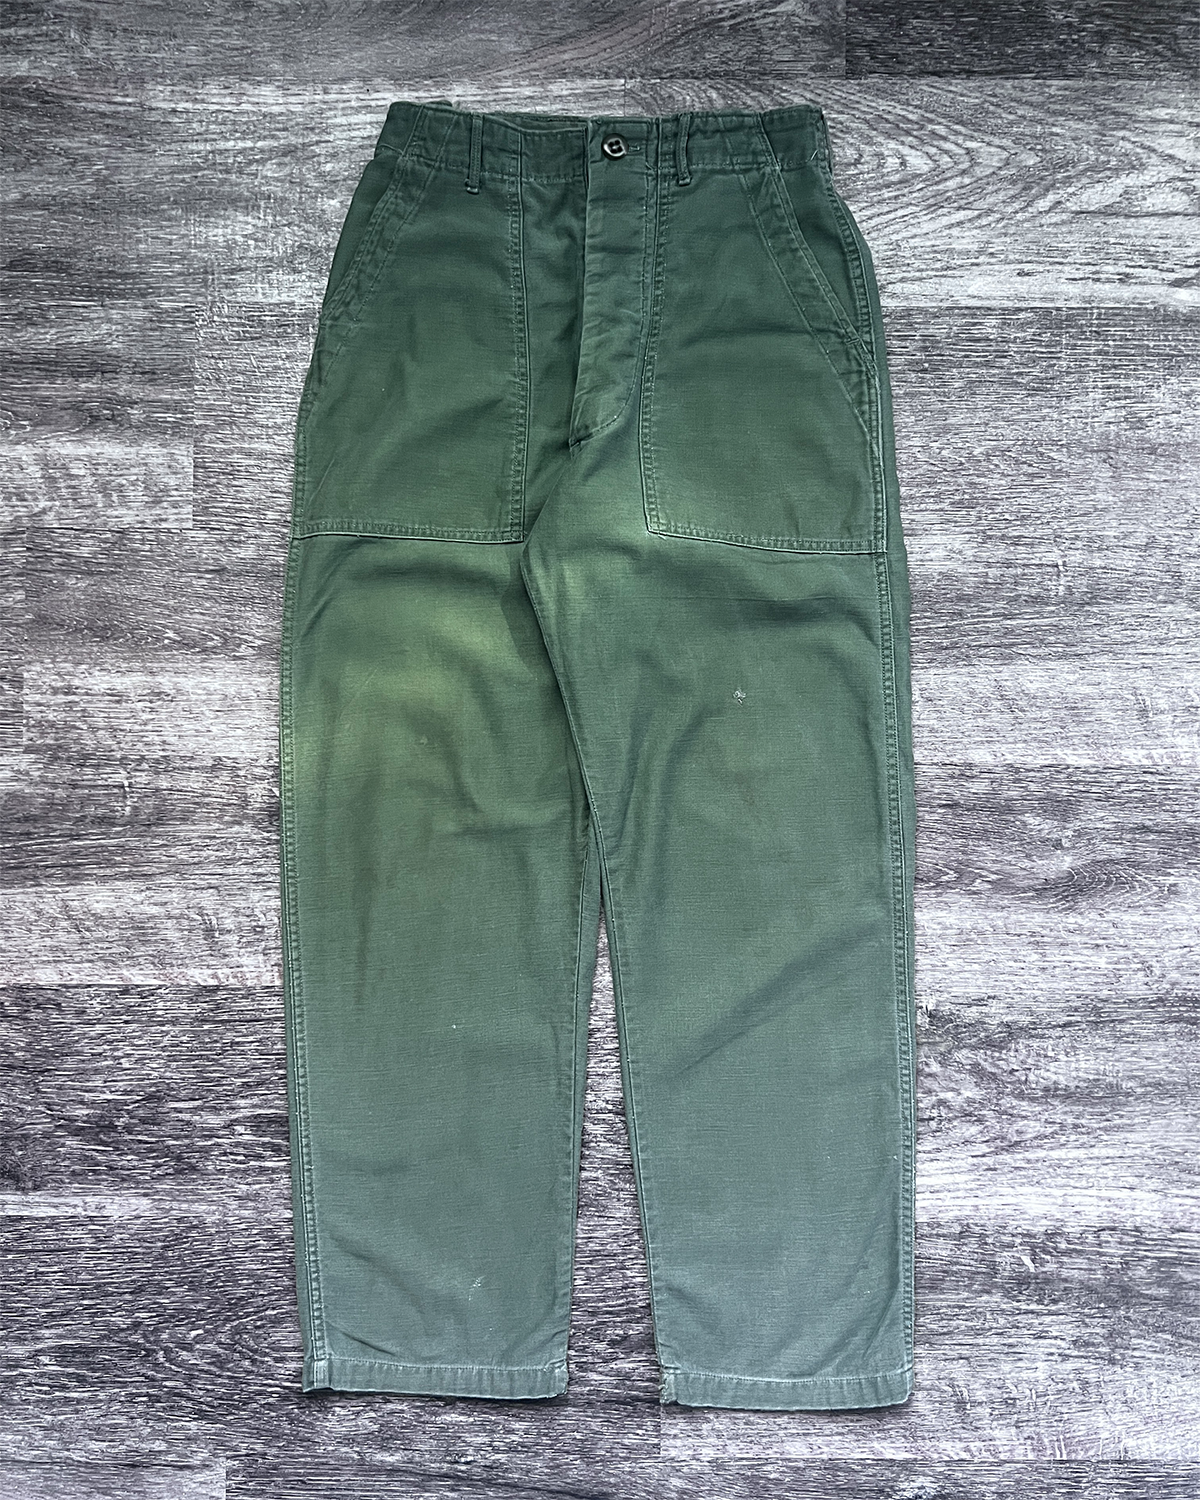 1970s OG-107 Fatigue Pants - Size 27 x 28